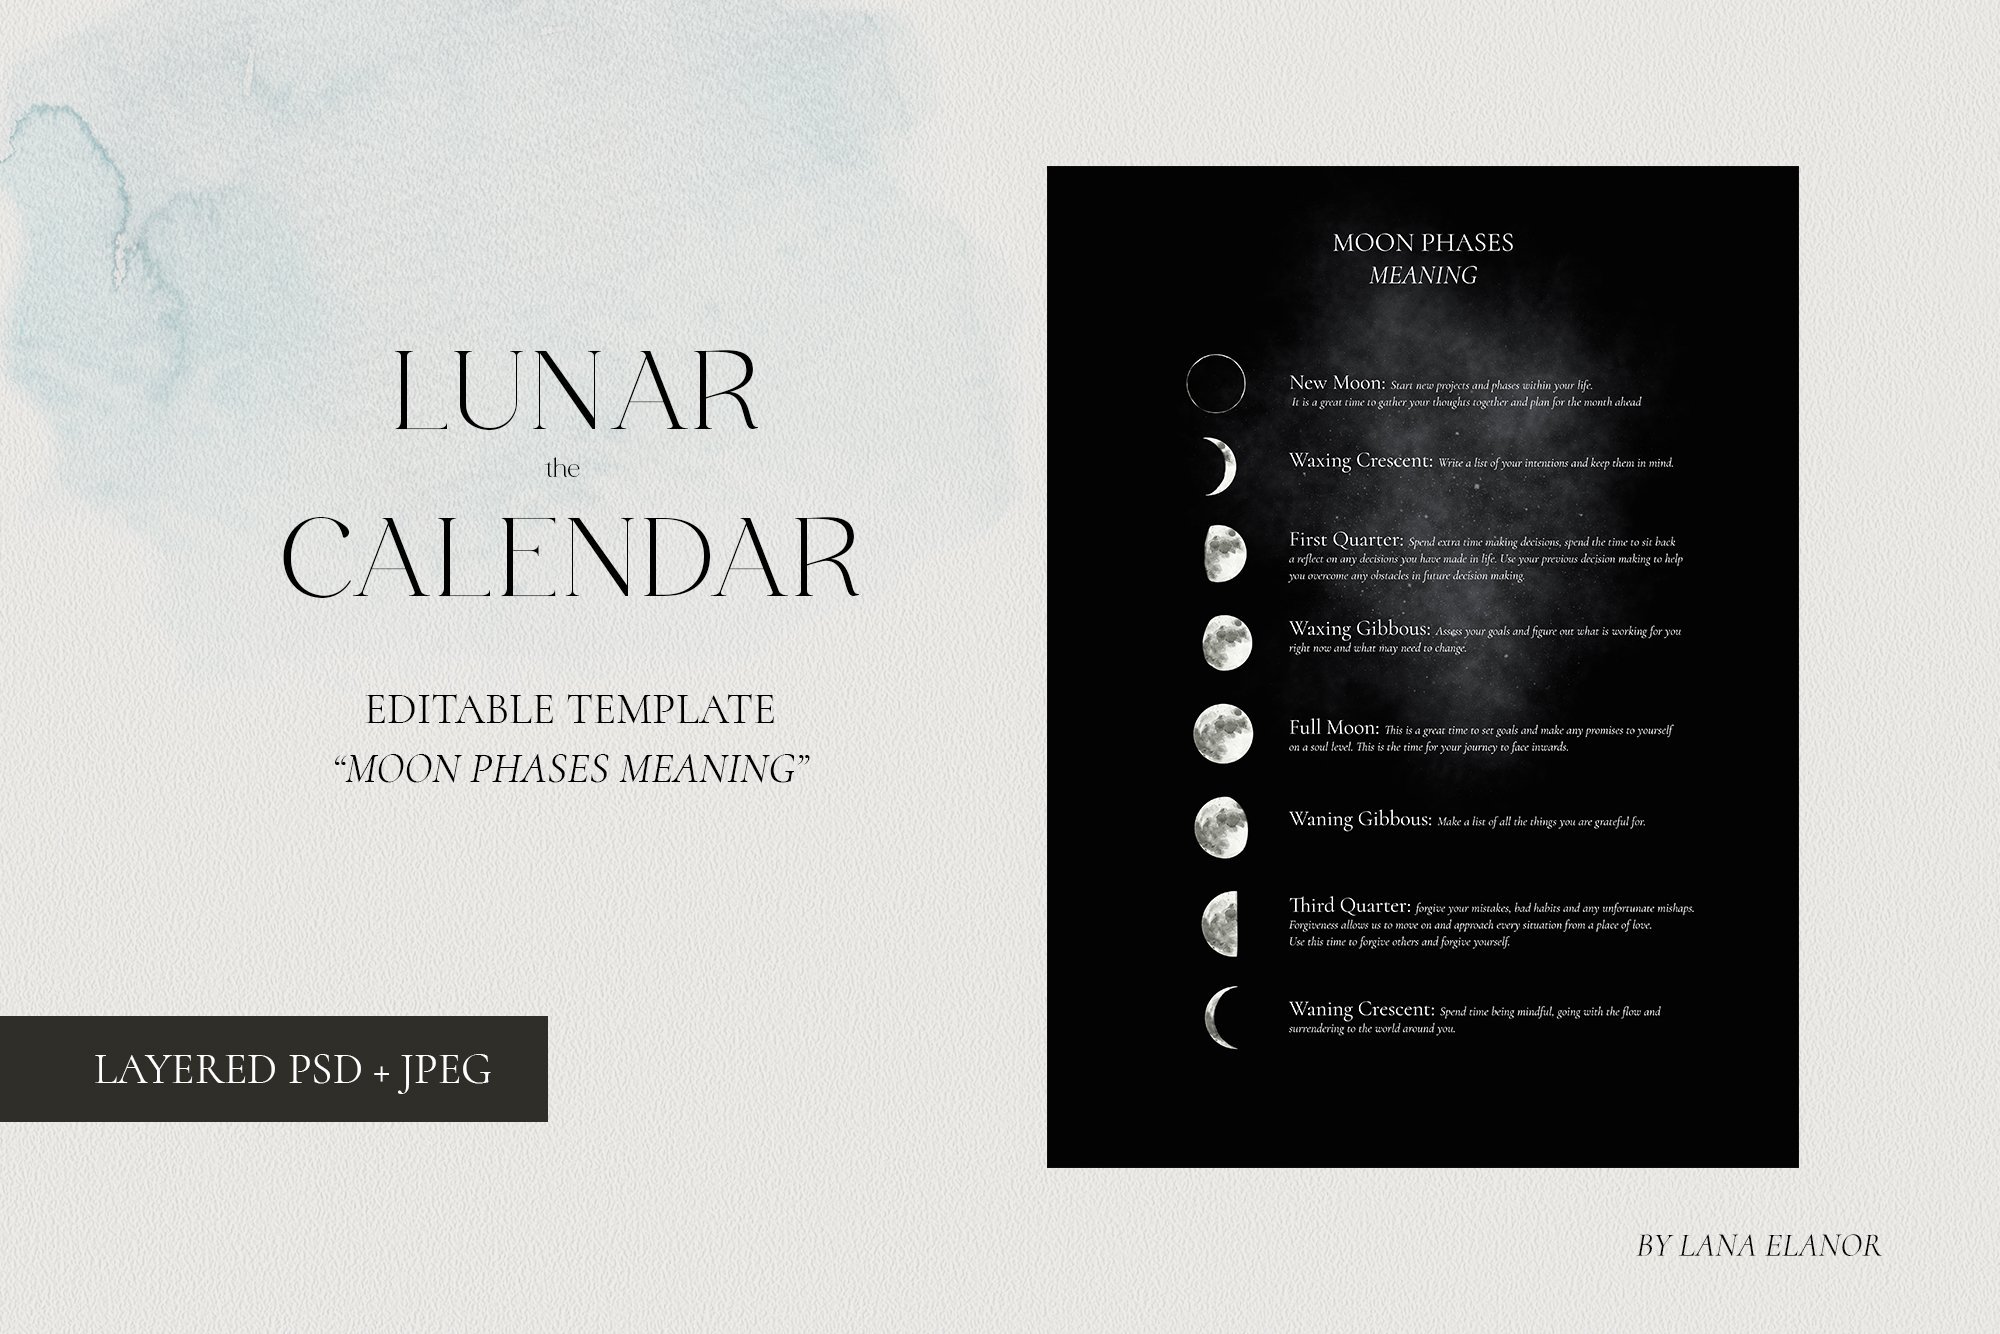 Lunar Calendar 2021 Ethereal Edition